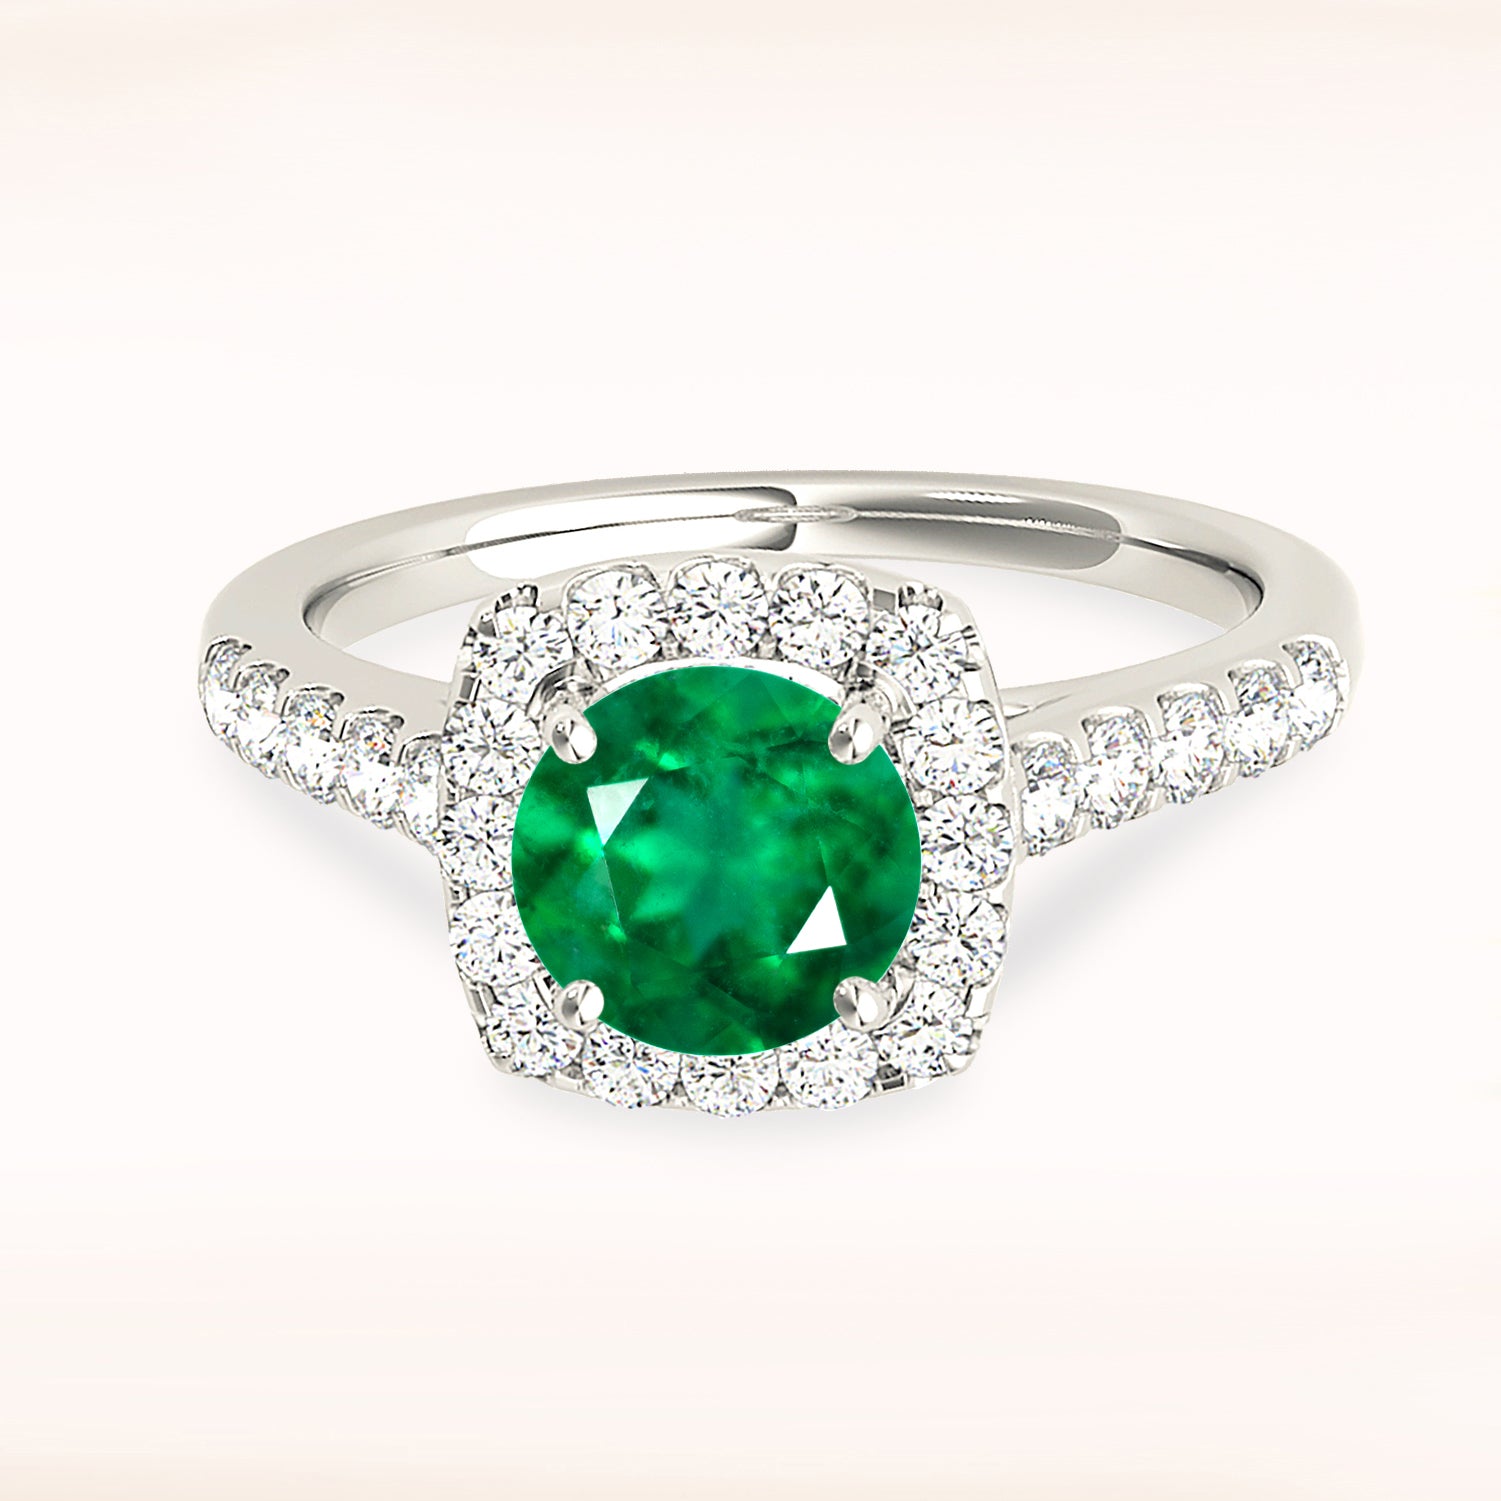 1.75 ct. Genuine Emerald Ring With 0.60 ctw. Diamond Cushion Halo, Delicate Diamond Band-in 14K/18K White, Yellow, Rose Gold and Platinum - Christmas Jewelry Gift -VIRABYANI